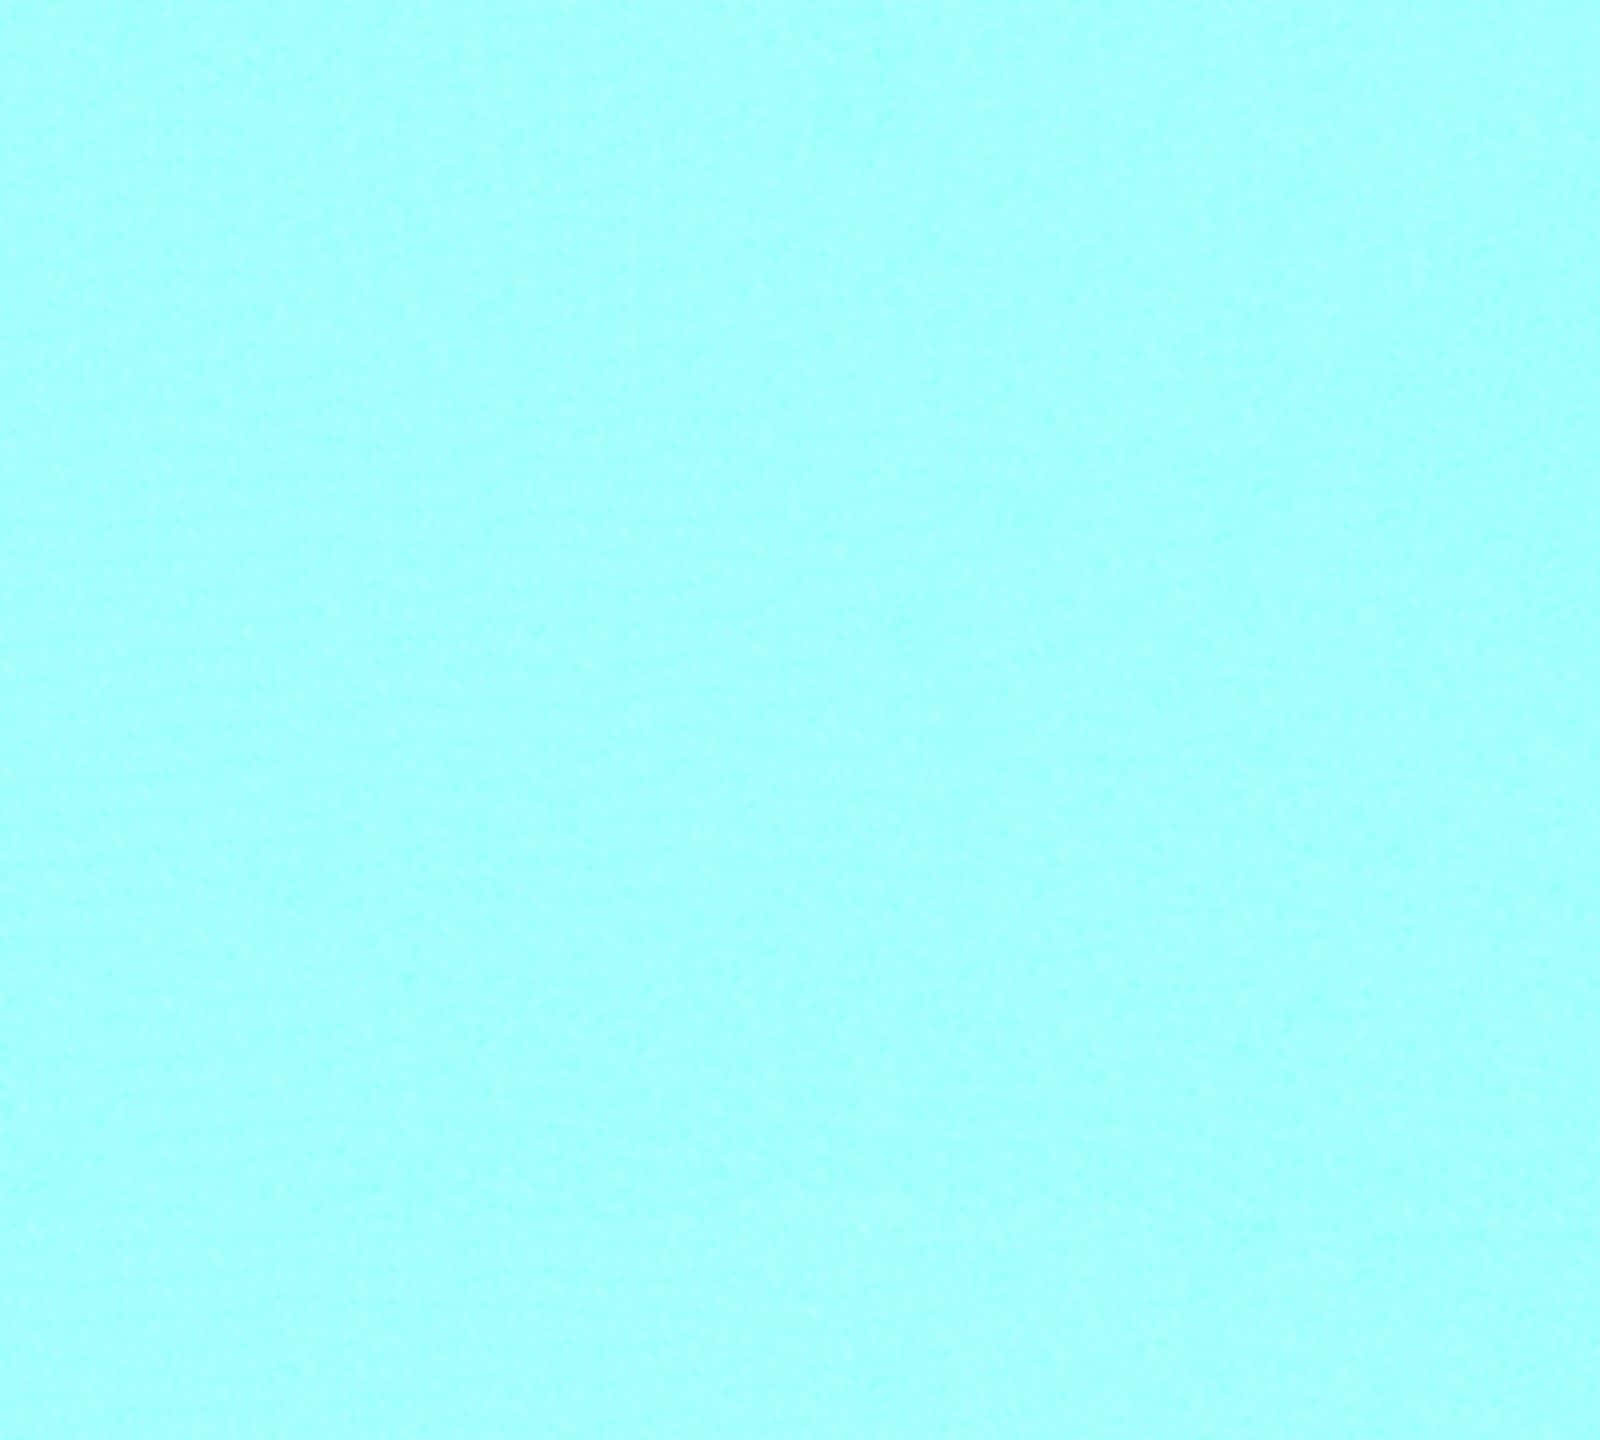 Plain Light Blue Pale Turquoise Background